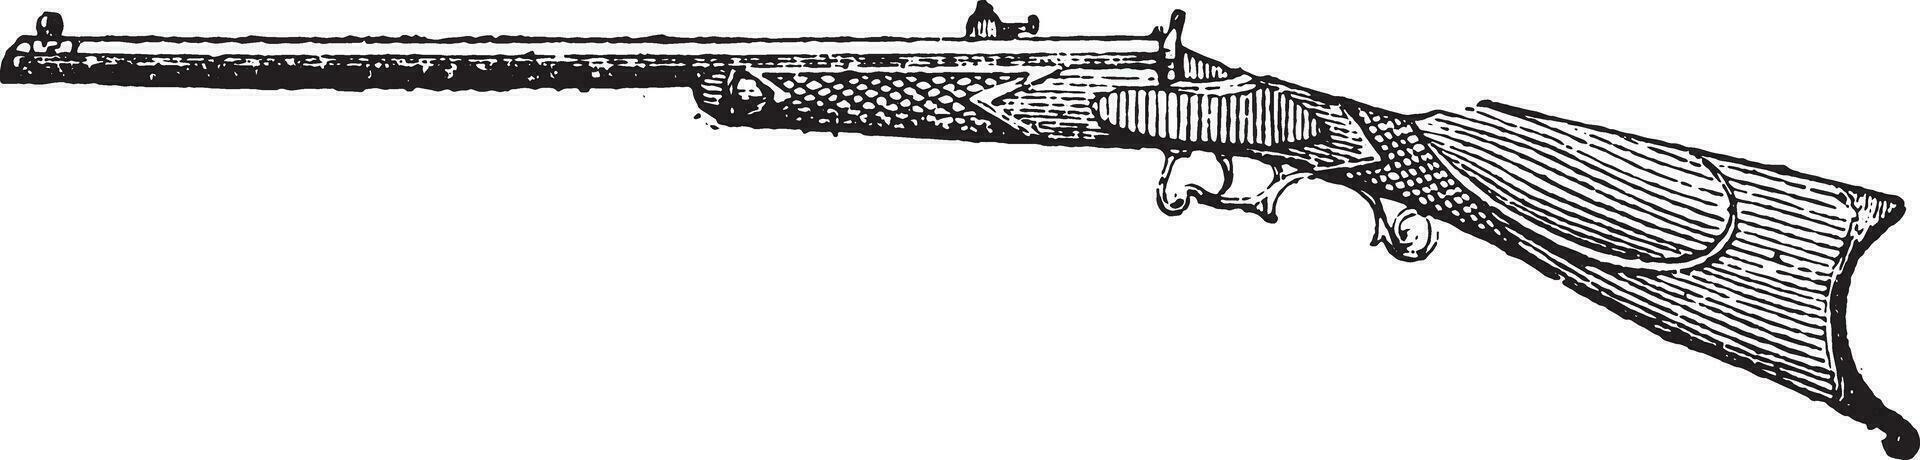 Paris rifle, vintage engraving. vector